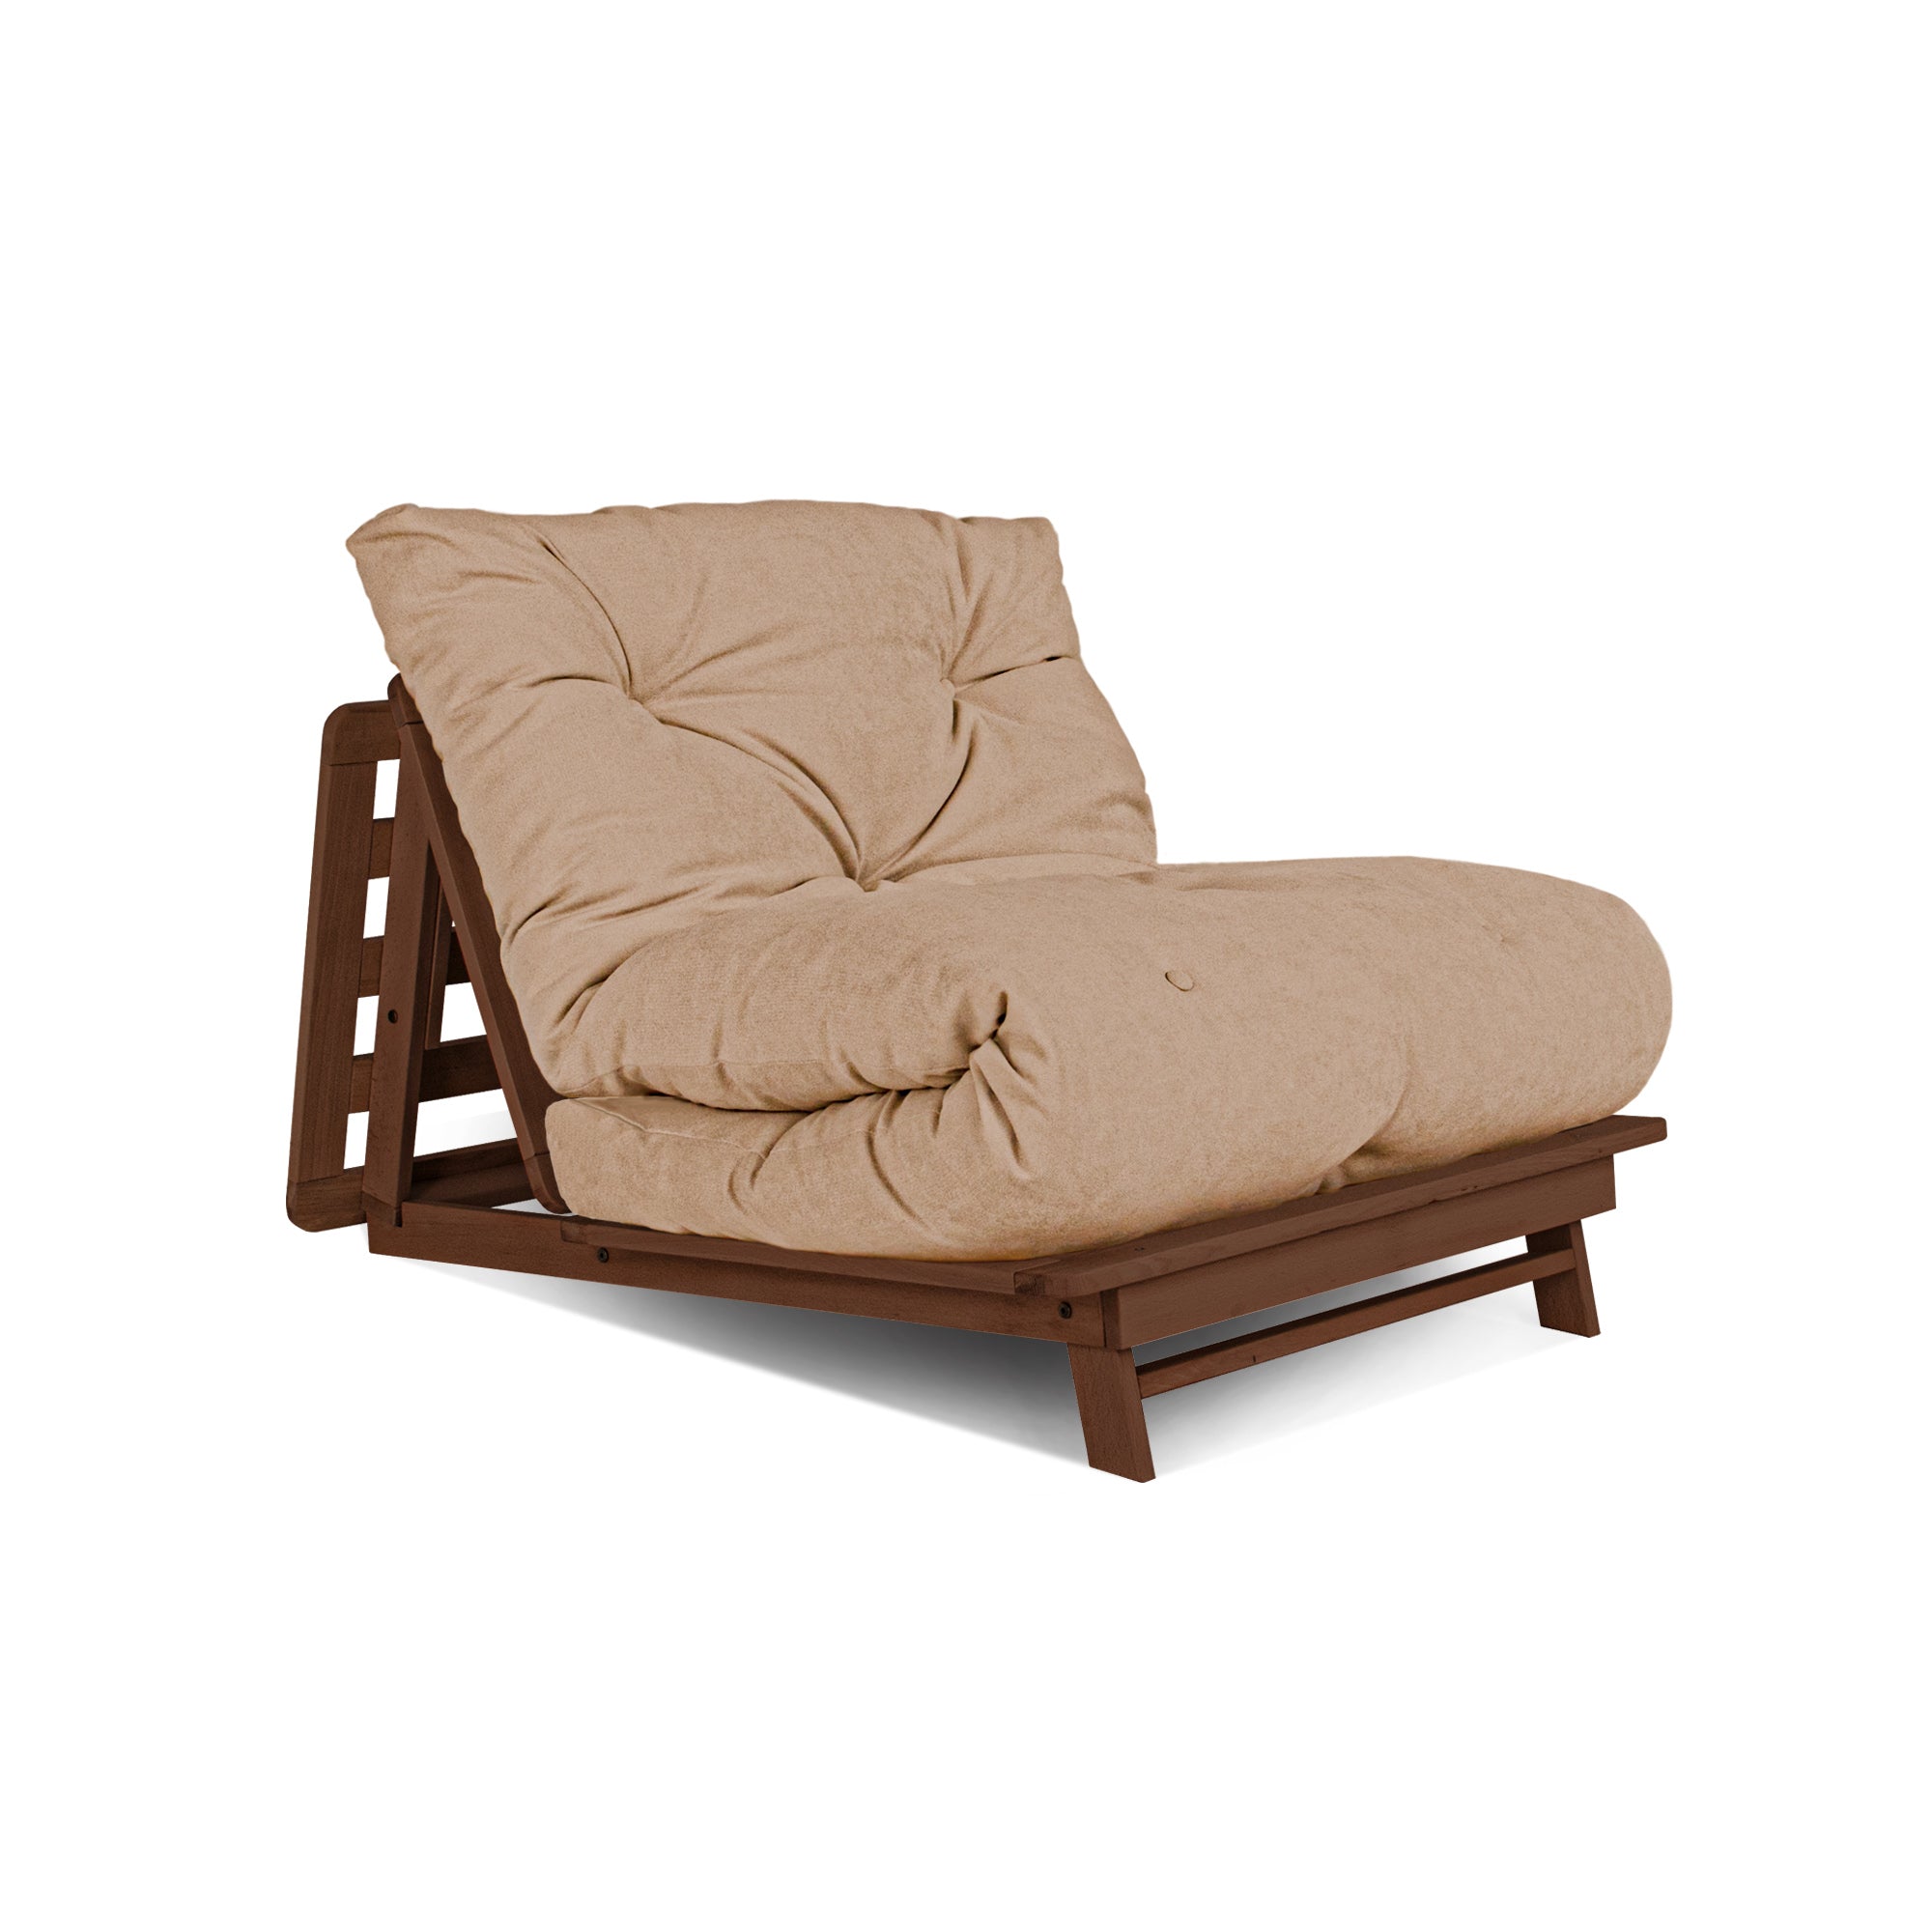 LAYTI-90 Futon Chair-walnut frame-beige fabric